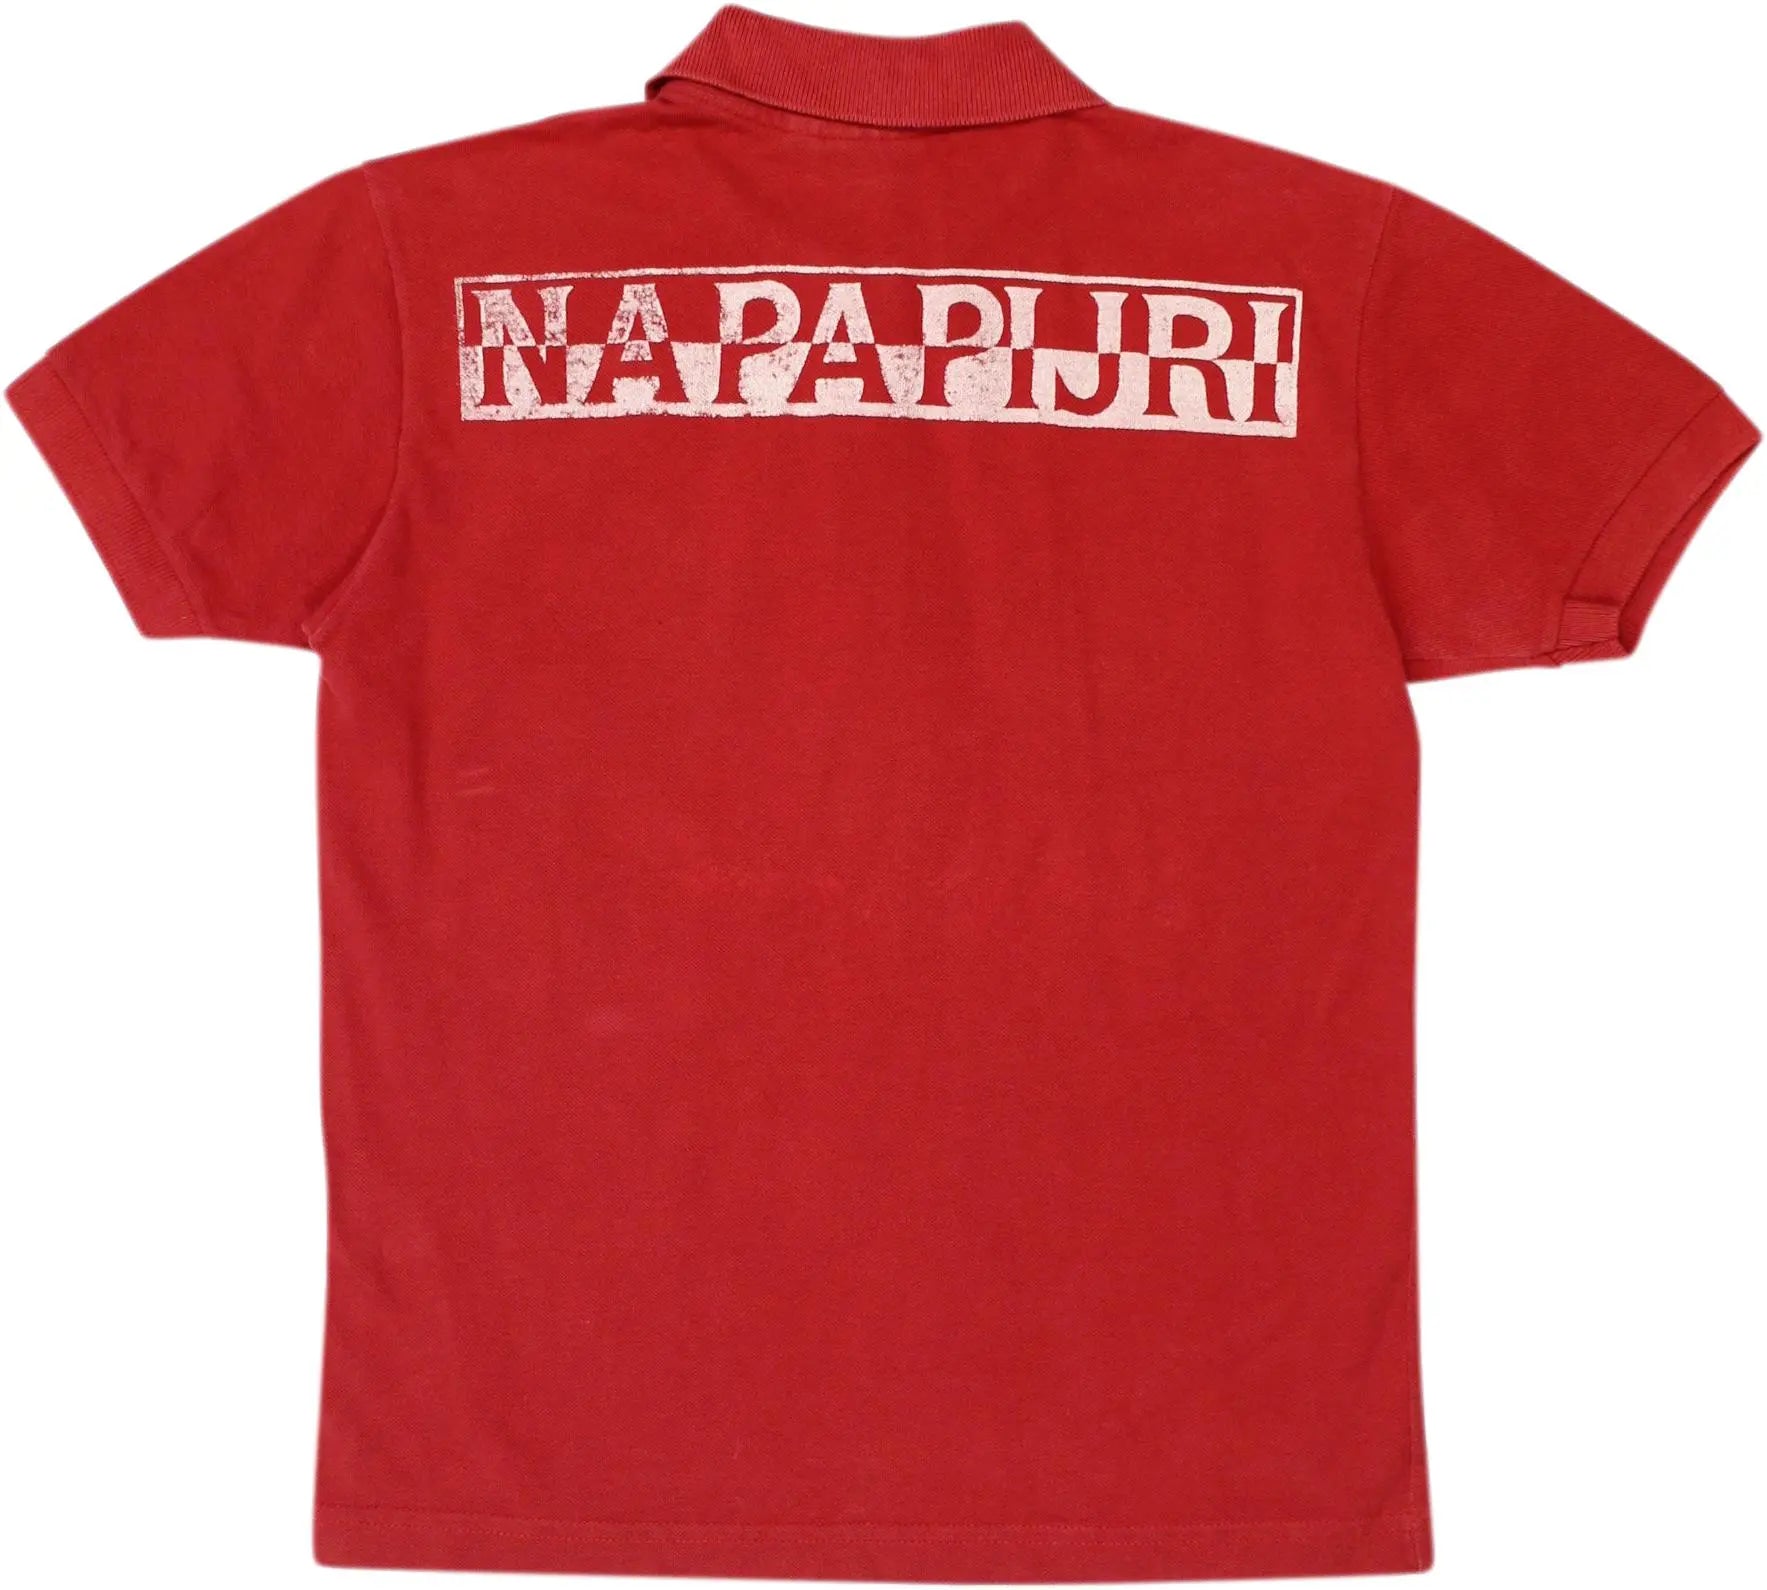 Napapijri - Red Polo Shirt by Napapijri- ThriftTale.com - Vintage and second handclothing